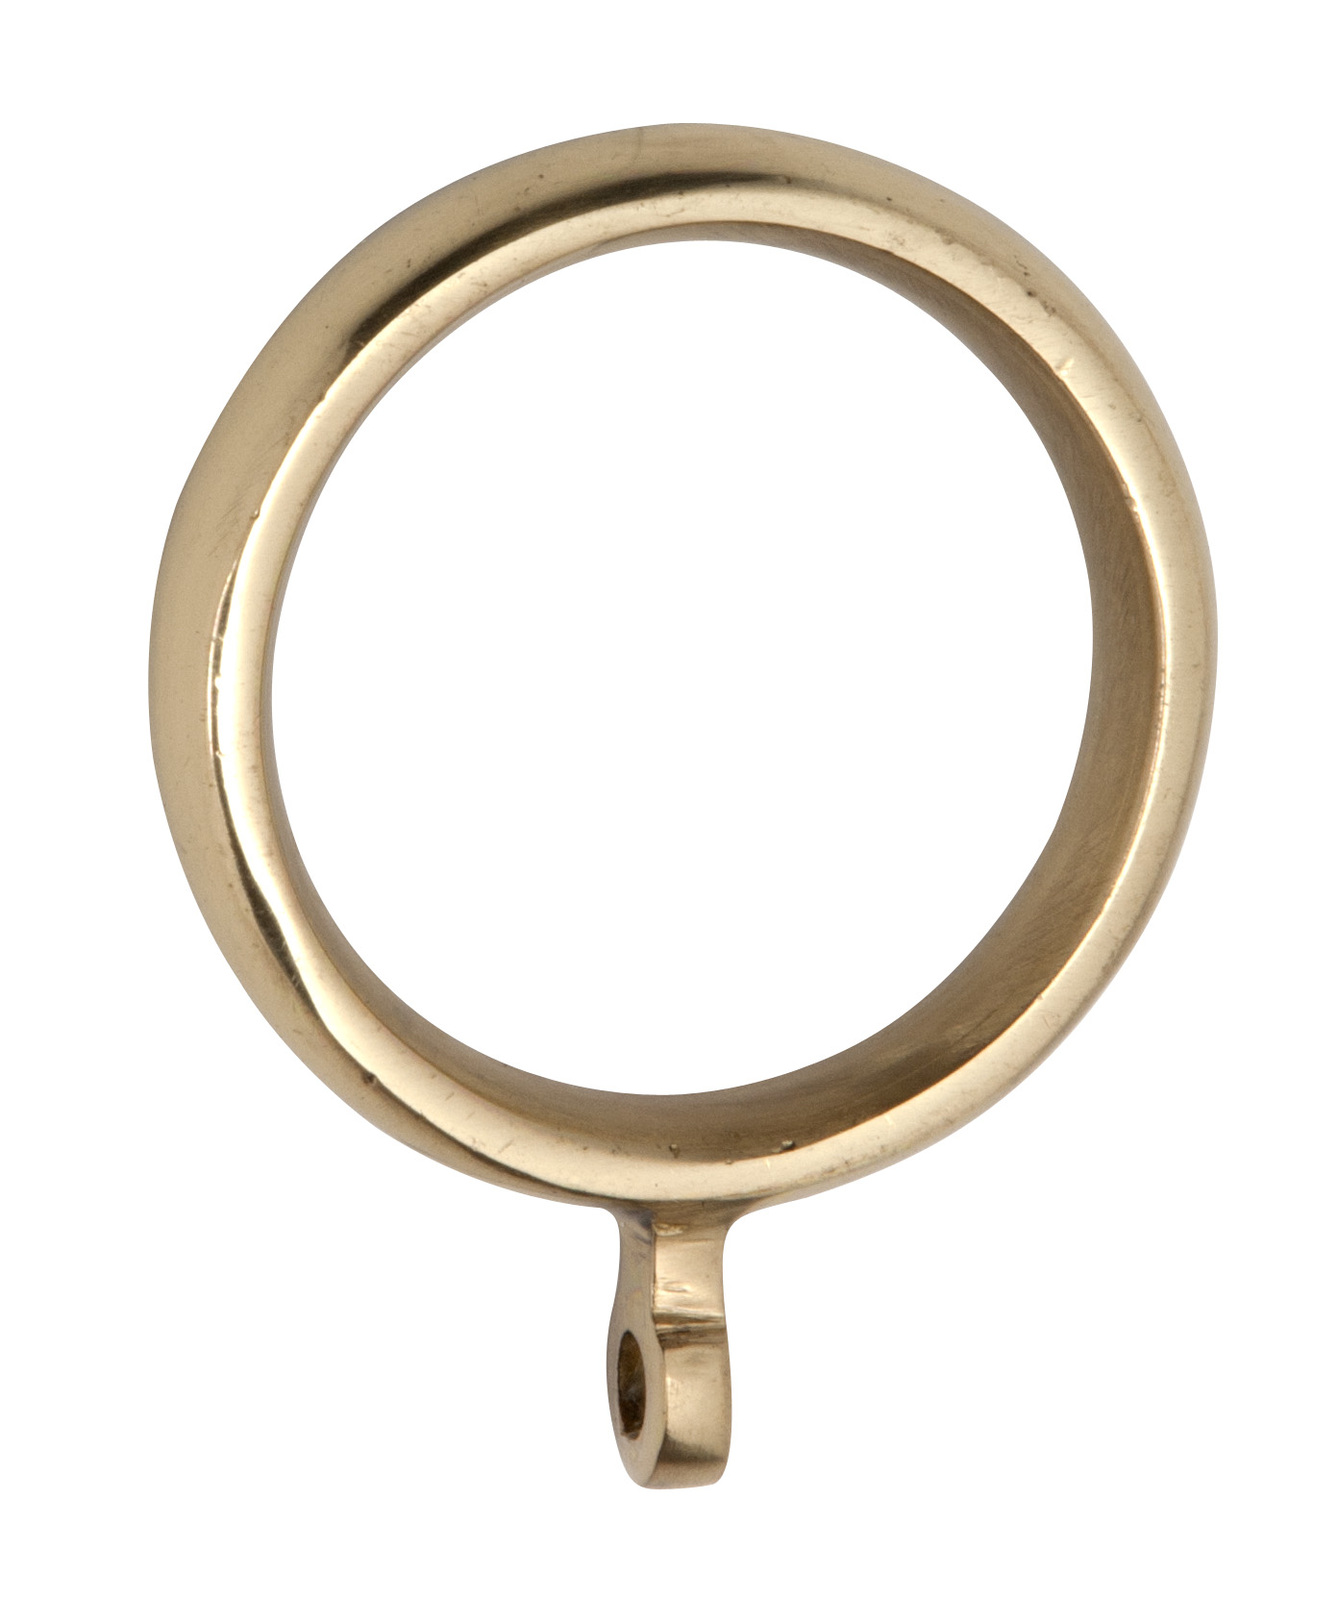 Tradco 4631PB Curtain Ring 32mm Internal Polished Brass |Free Shipping ...